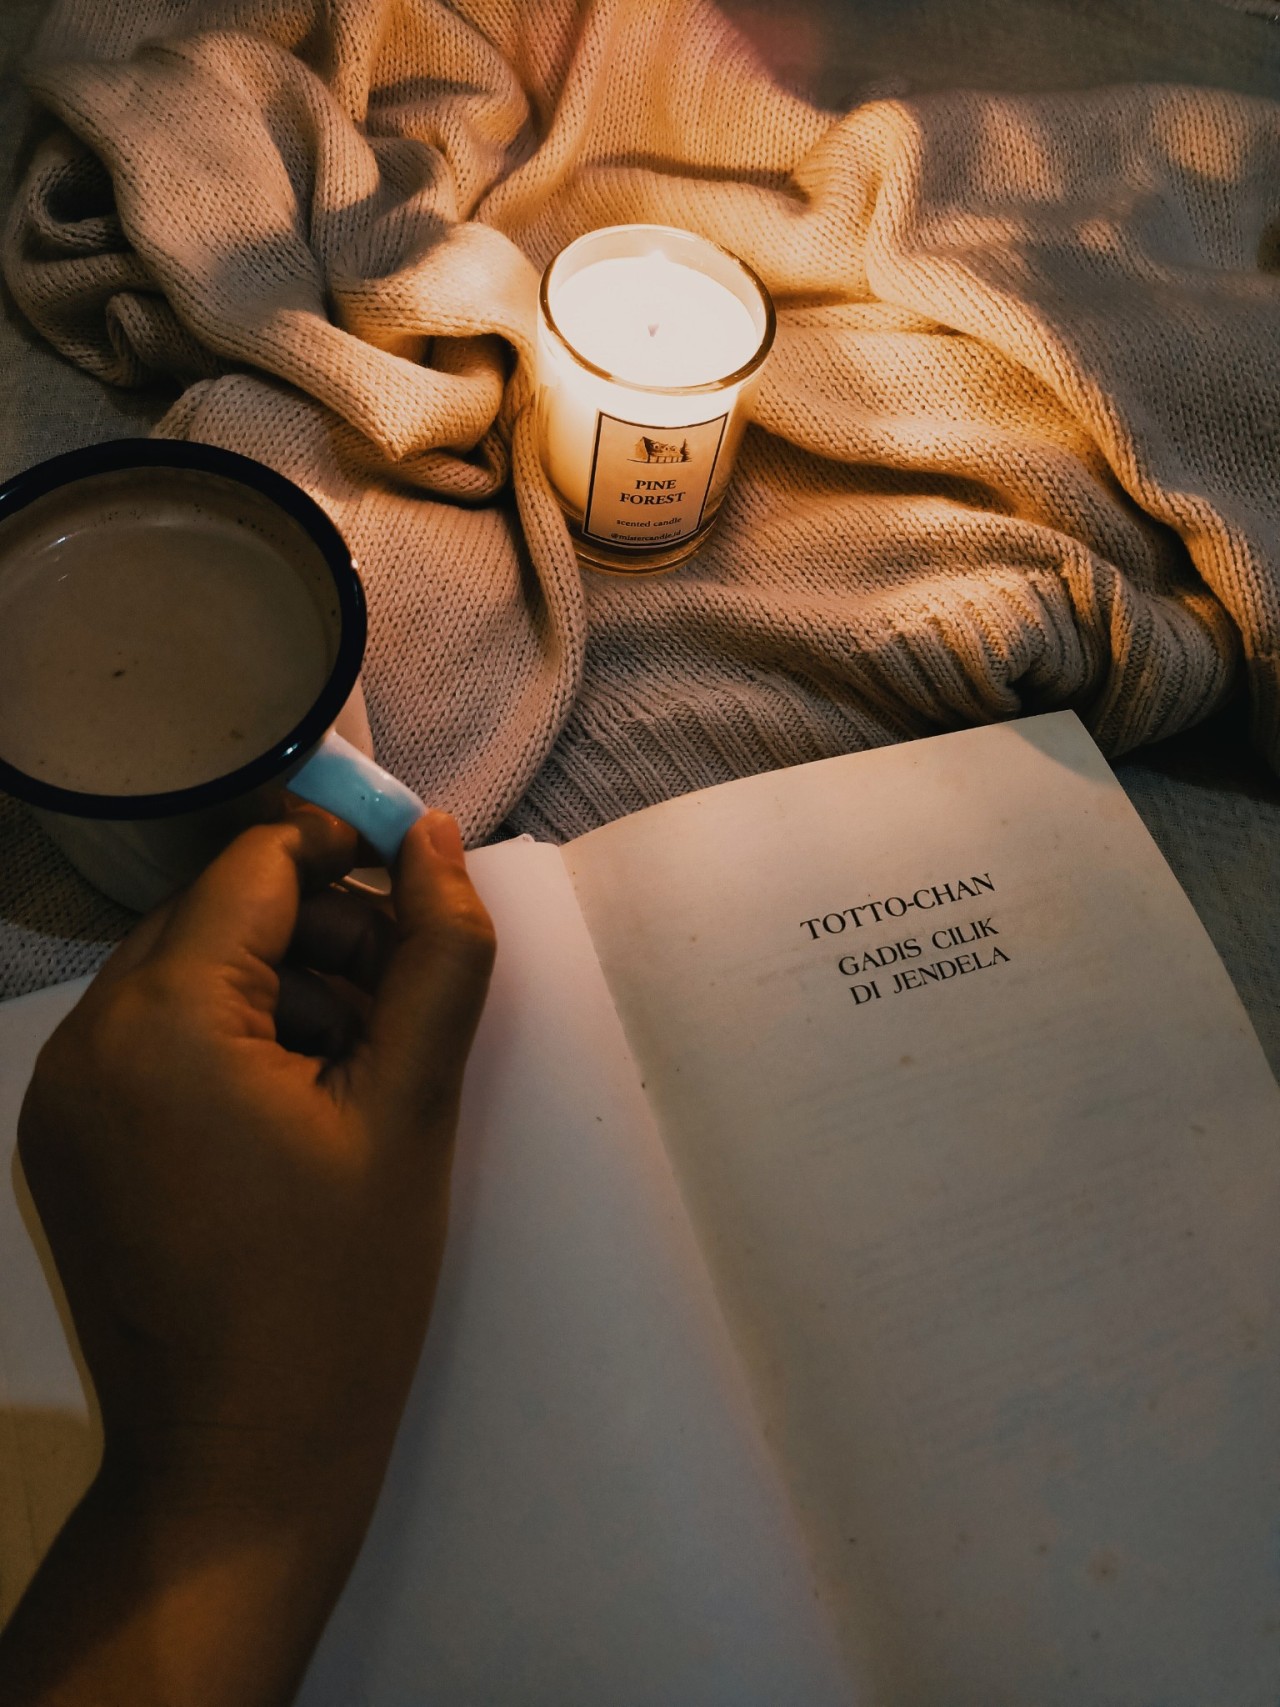 books on tumblr — Cozy night reading 🌛